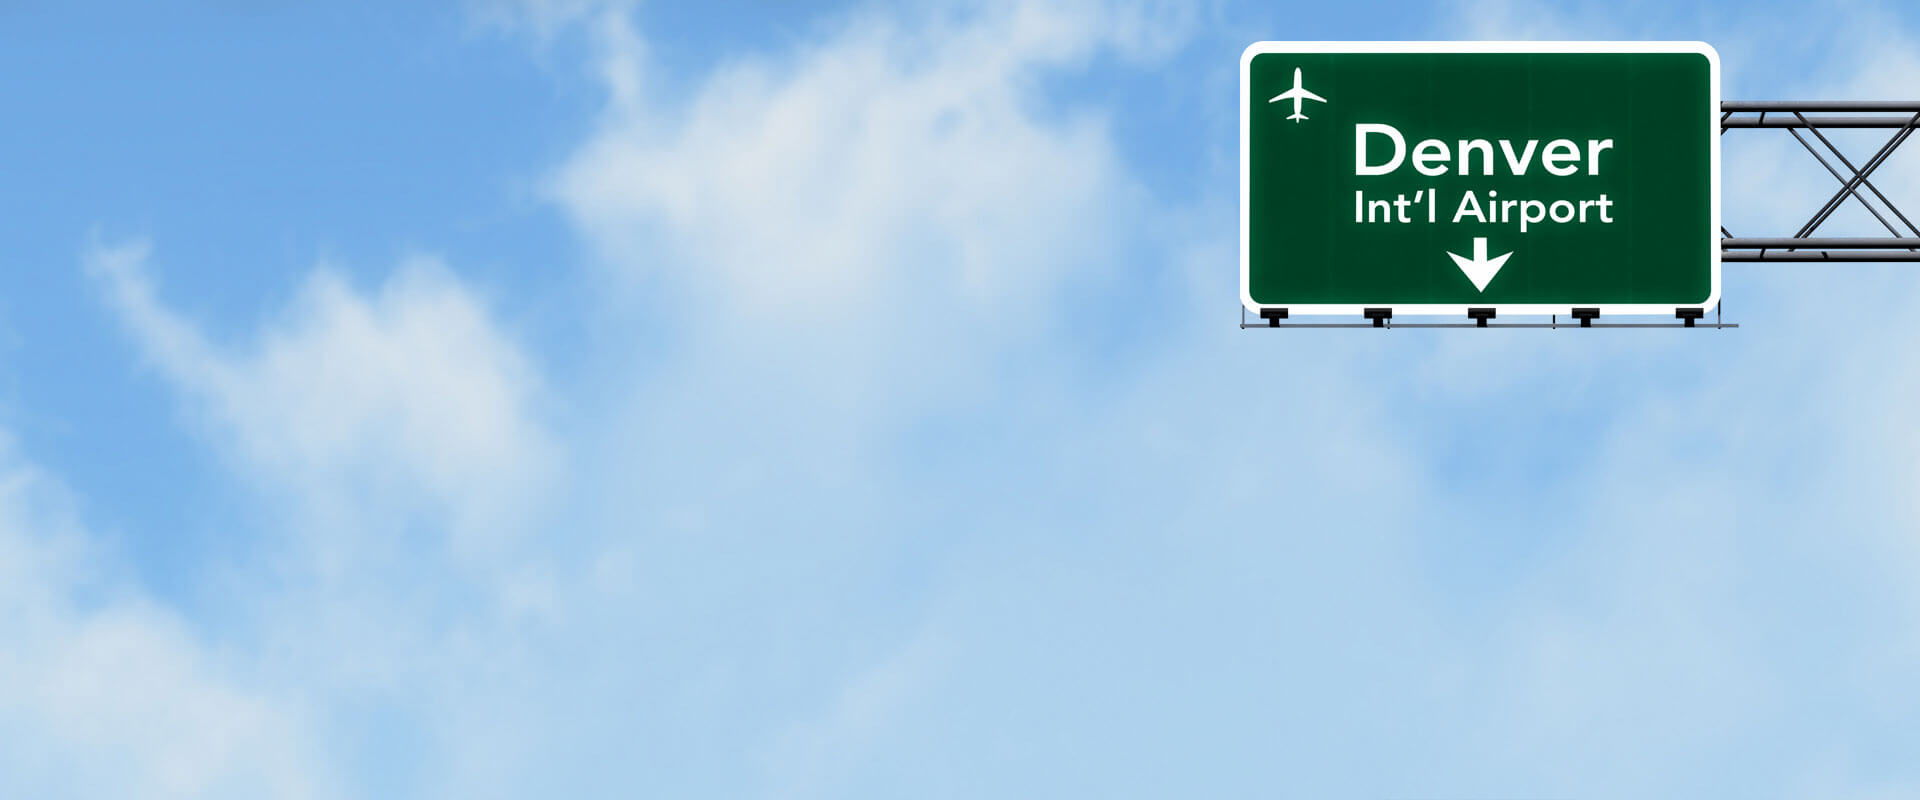 Denver Airport road sign